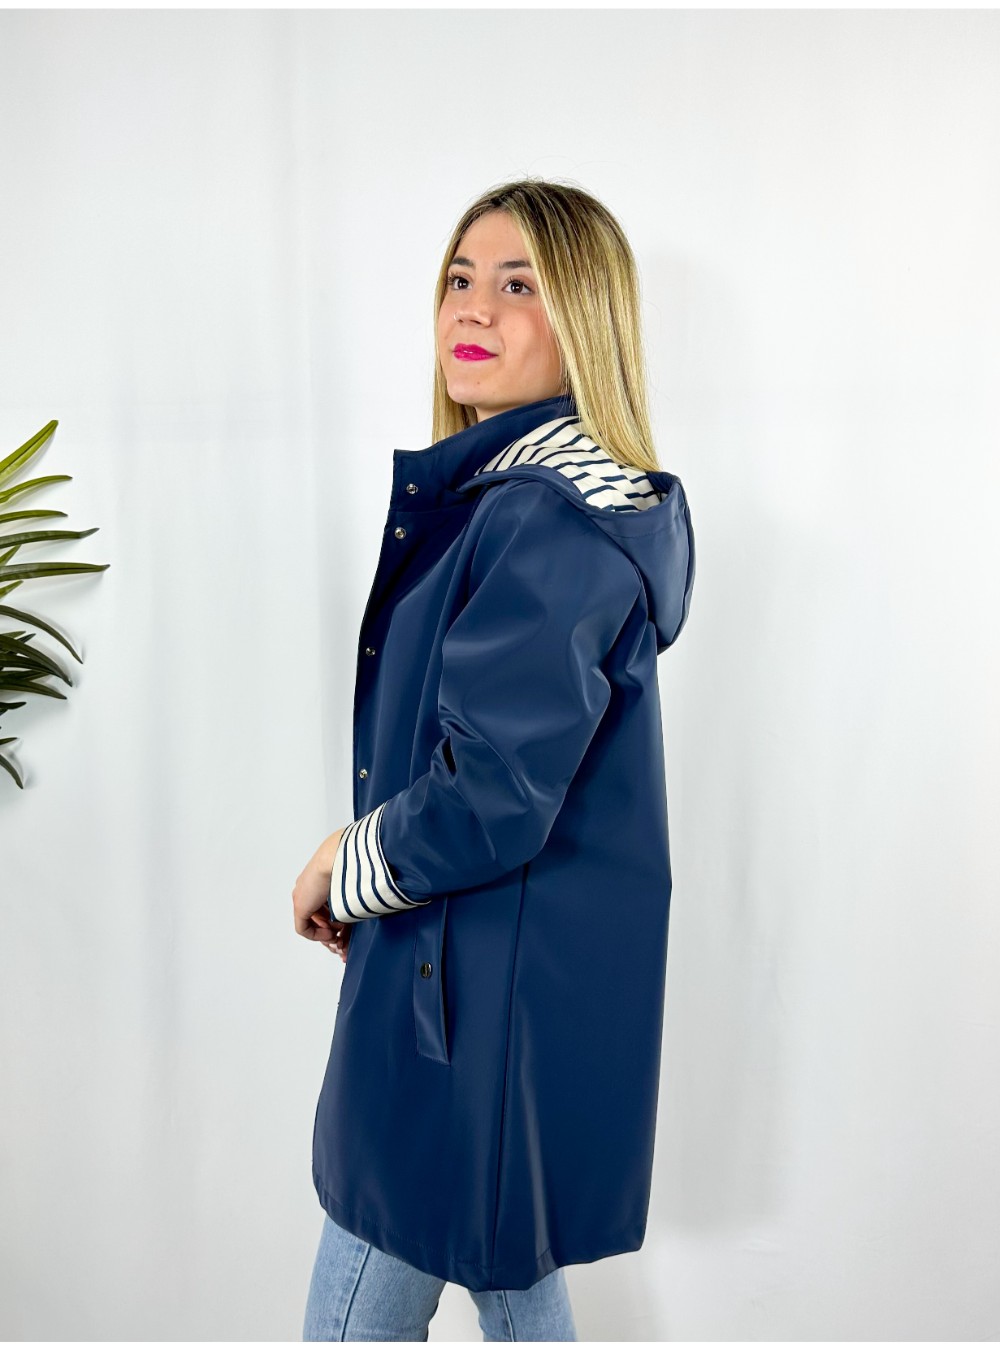 Chubasqueros Marineros Mujer – Enbata – Ropa marinera Moda Nautica en  Donostia